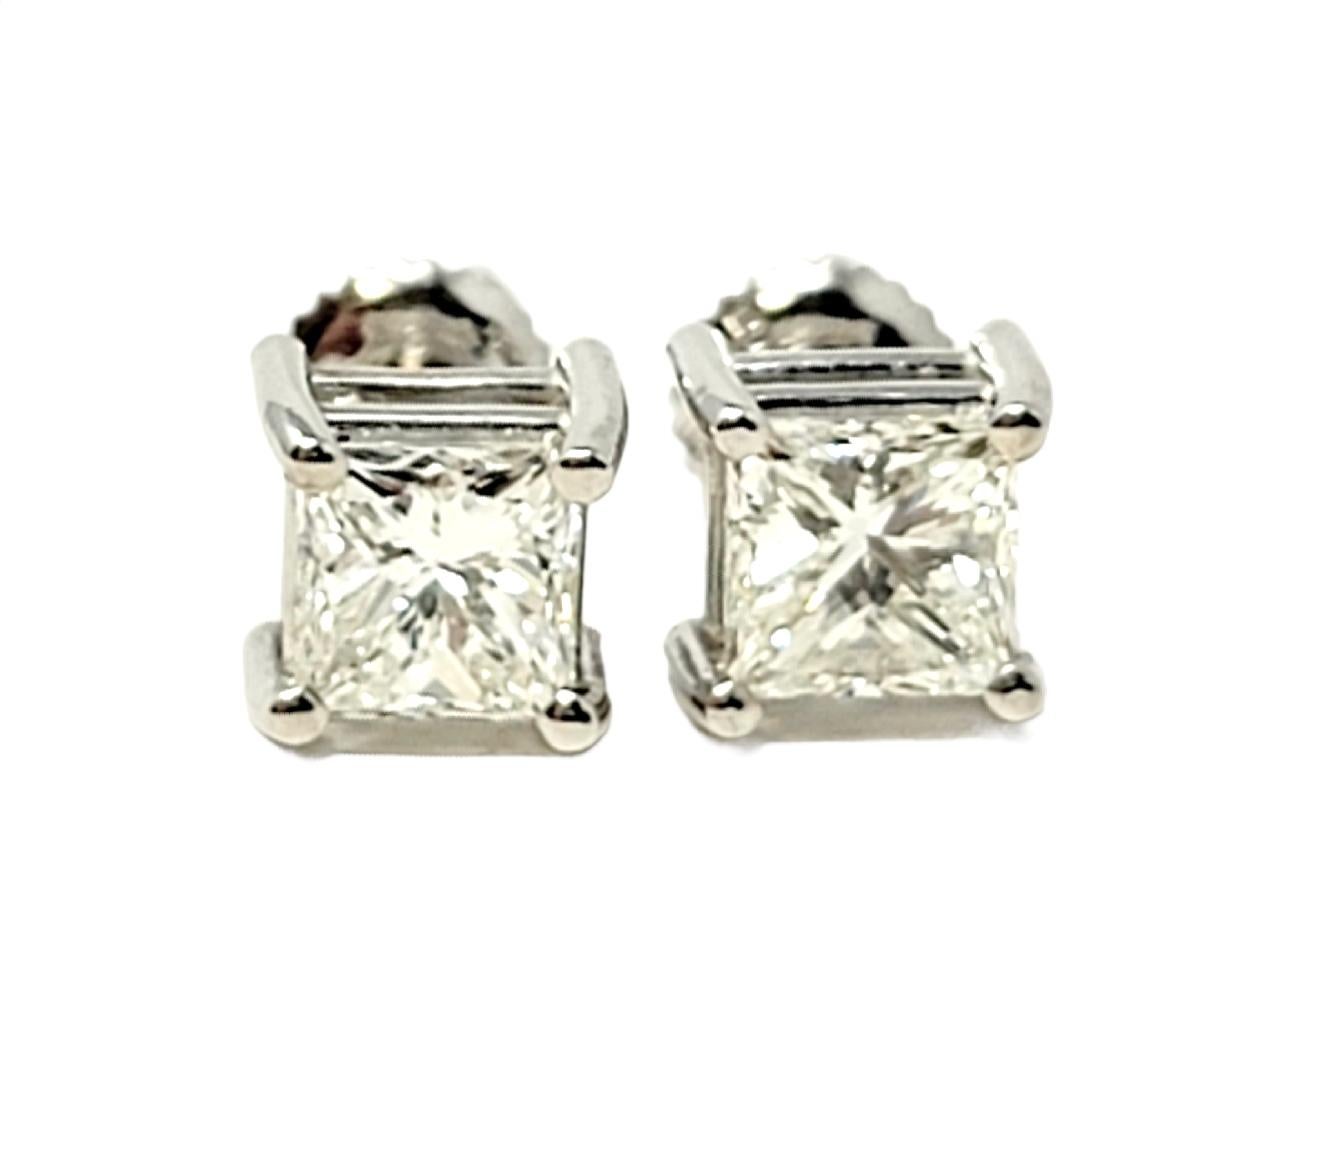 1.74 Carat Total Princess Cut Solitaire Diamond Stud Earrings in 14 Karat Gold 1